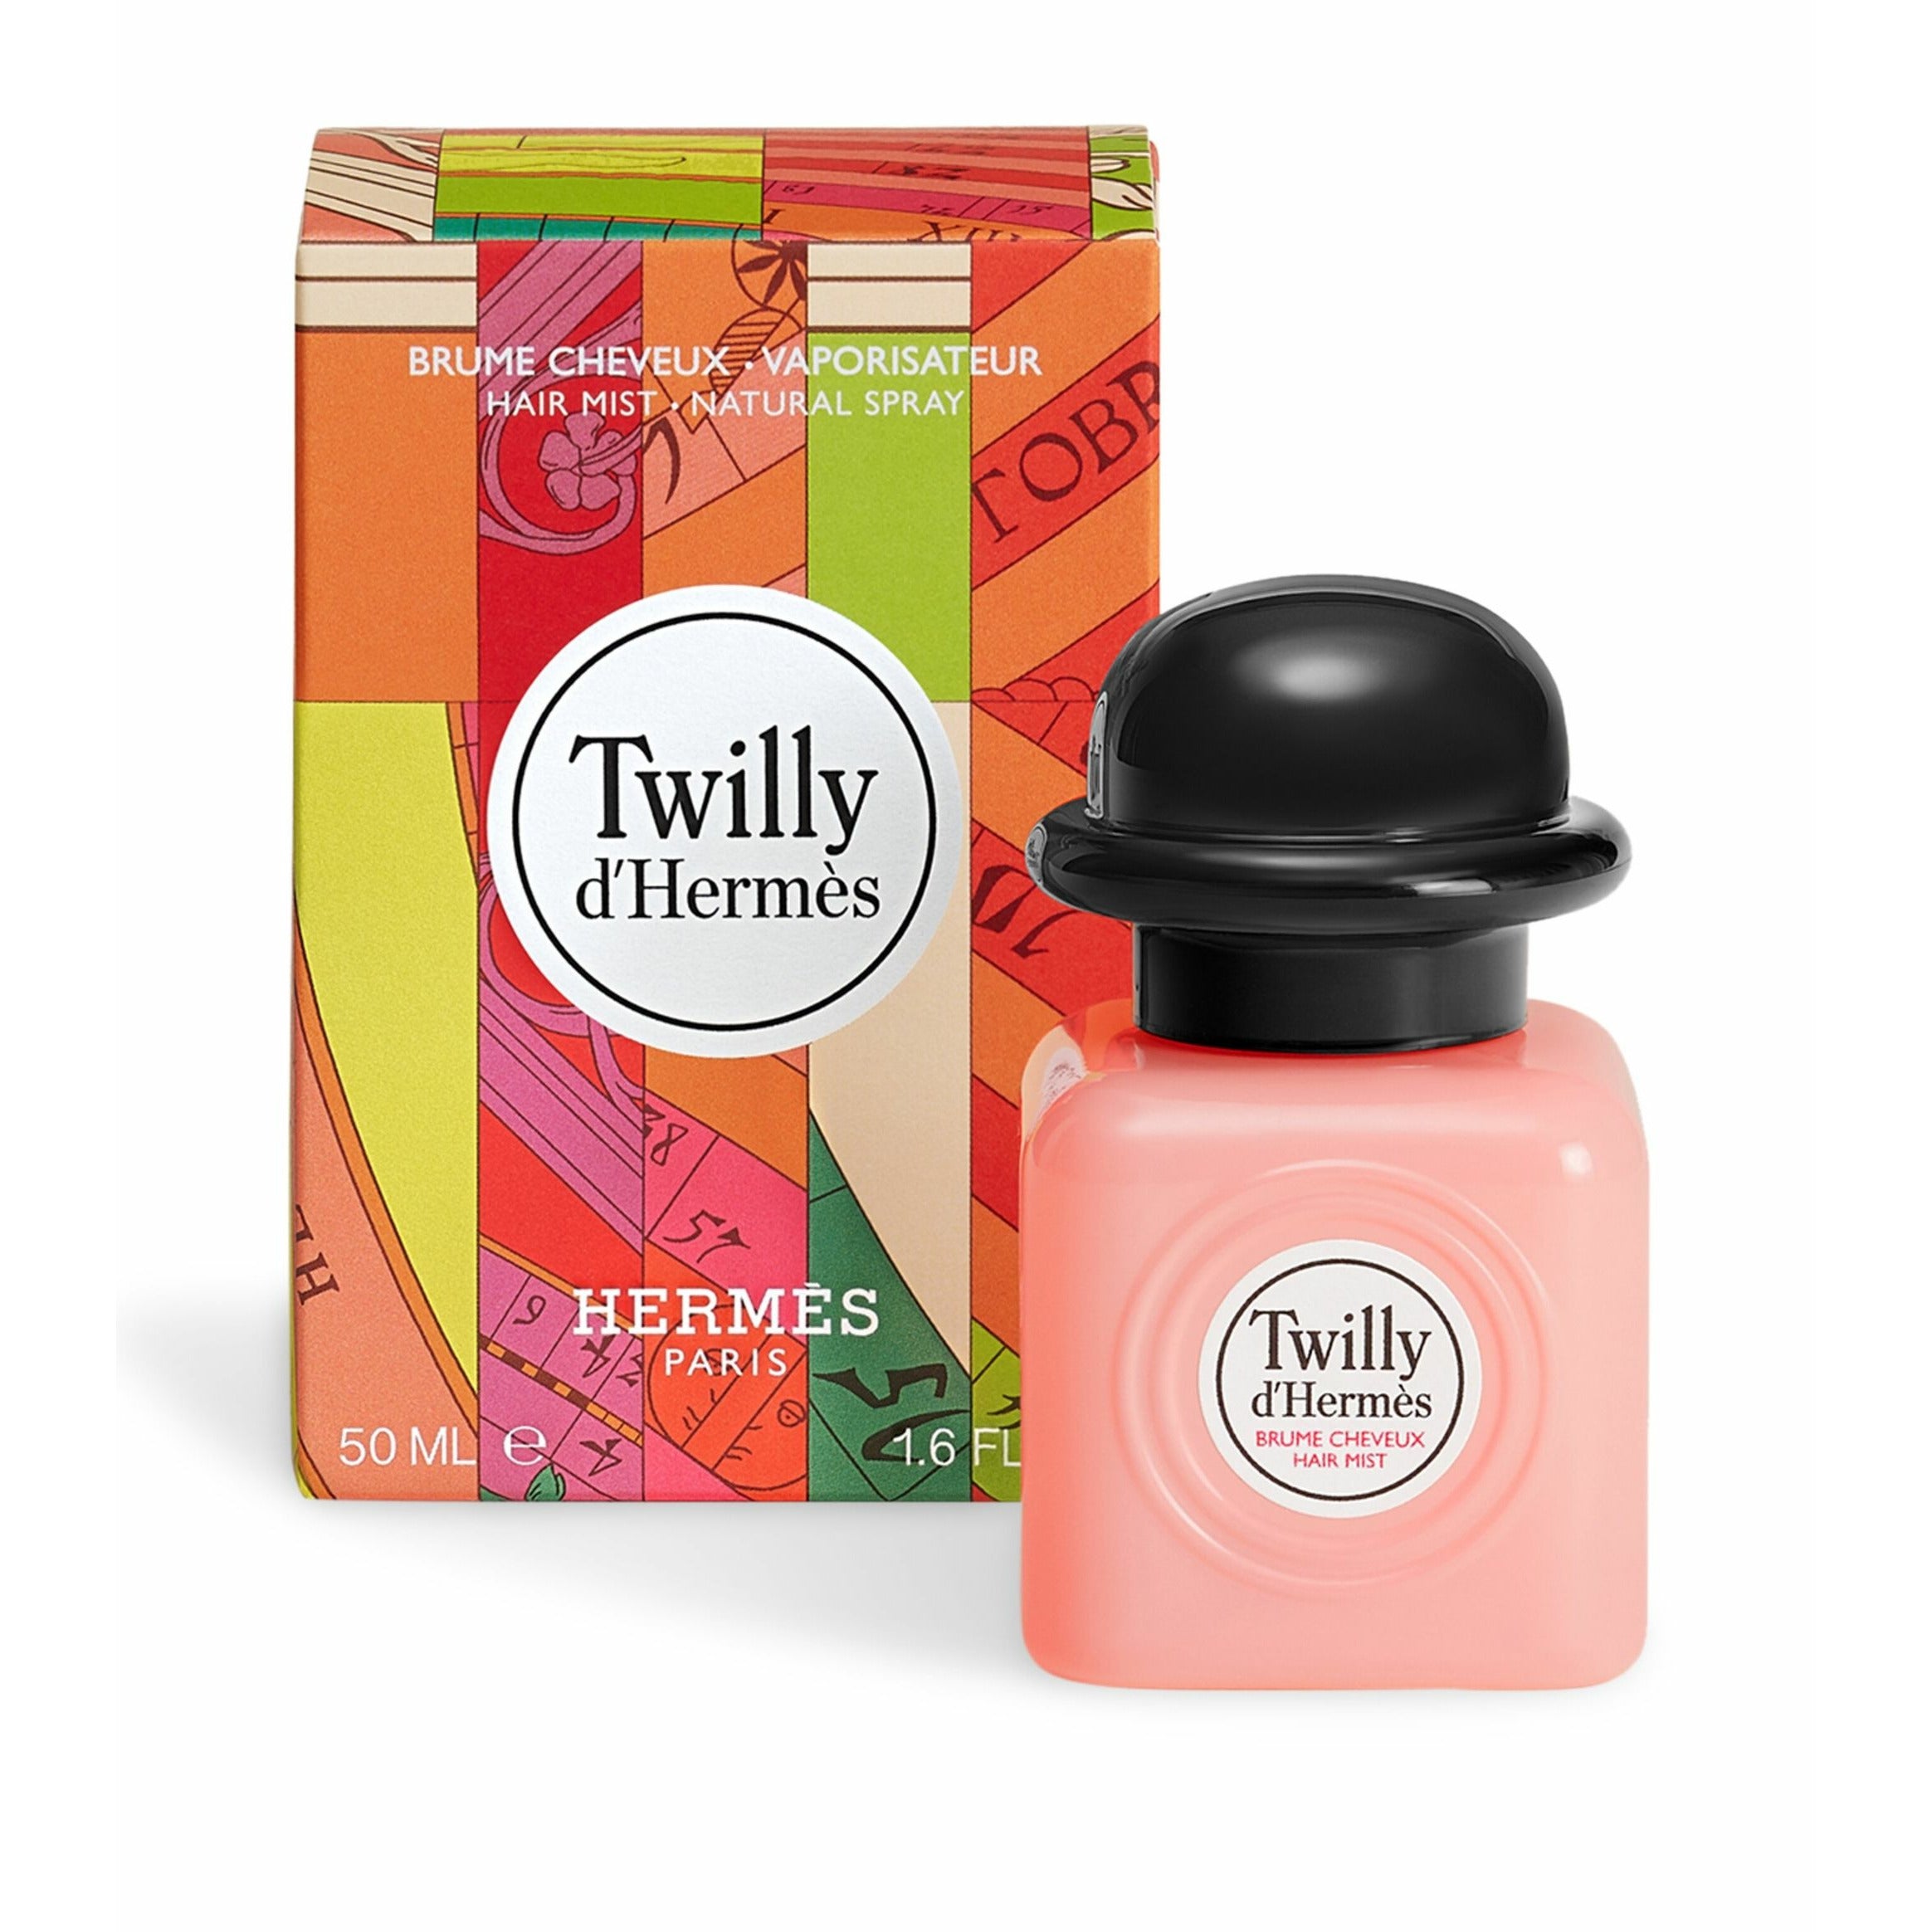 HERMES- Twilly D'Hermes Perfumed Hair Mist (50ML)